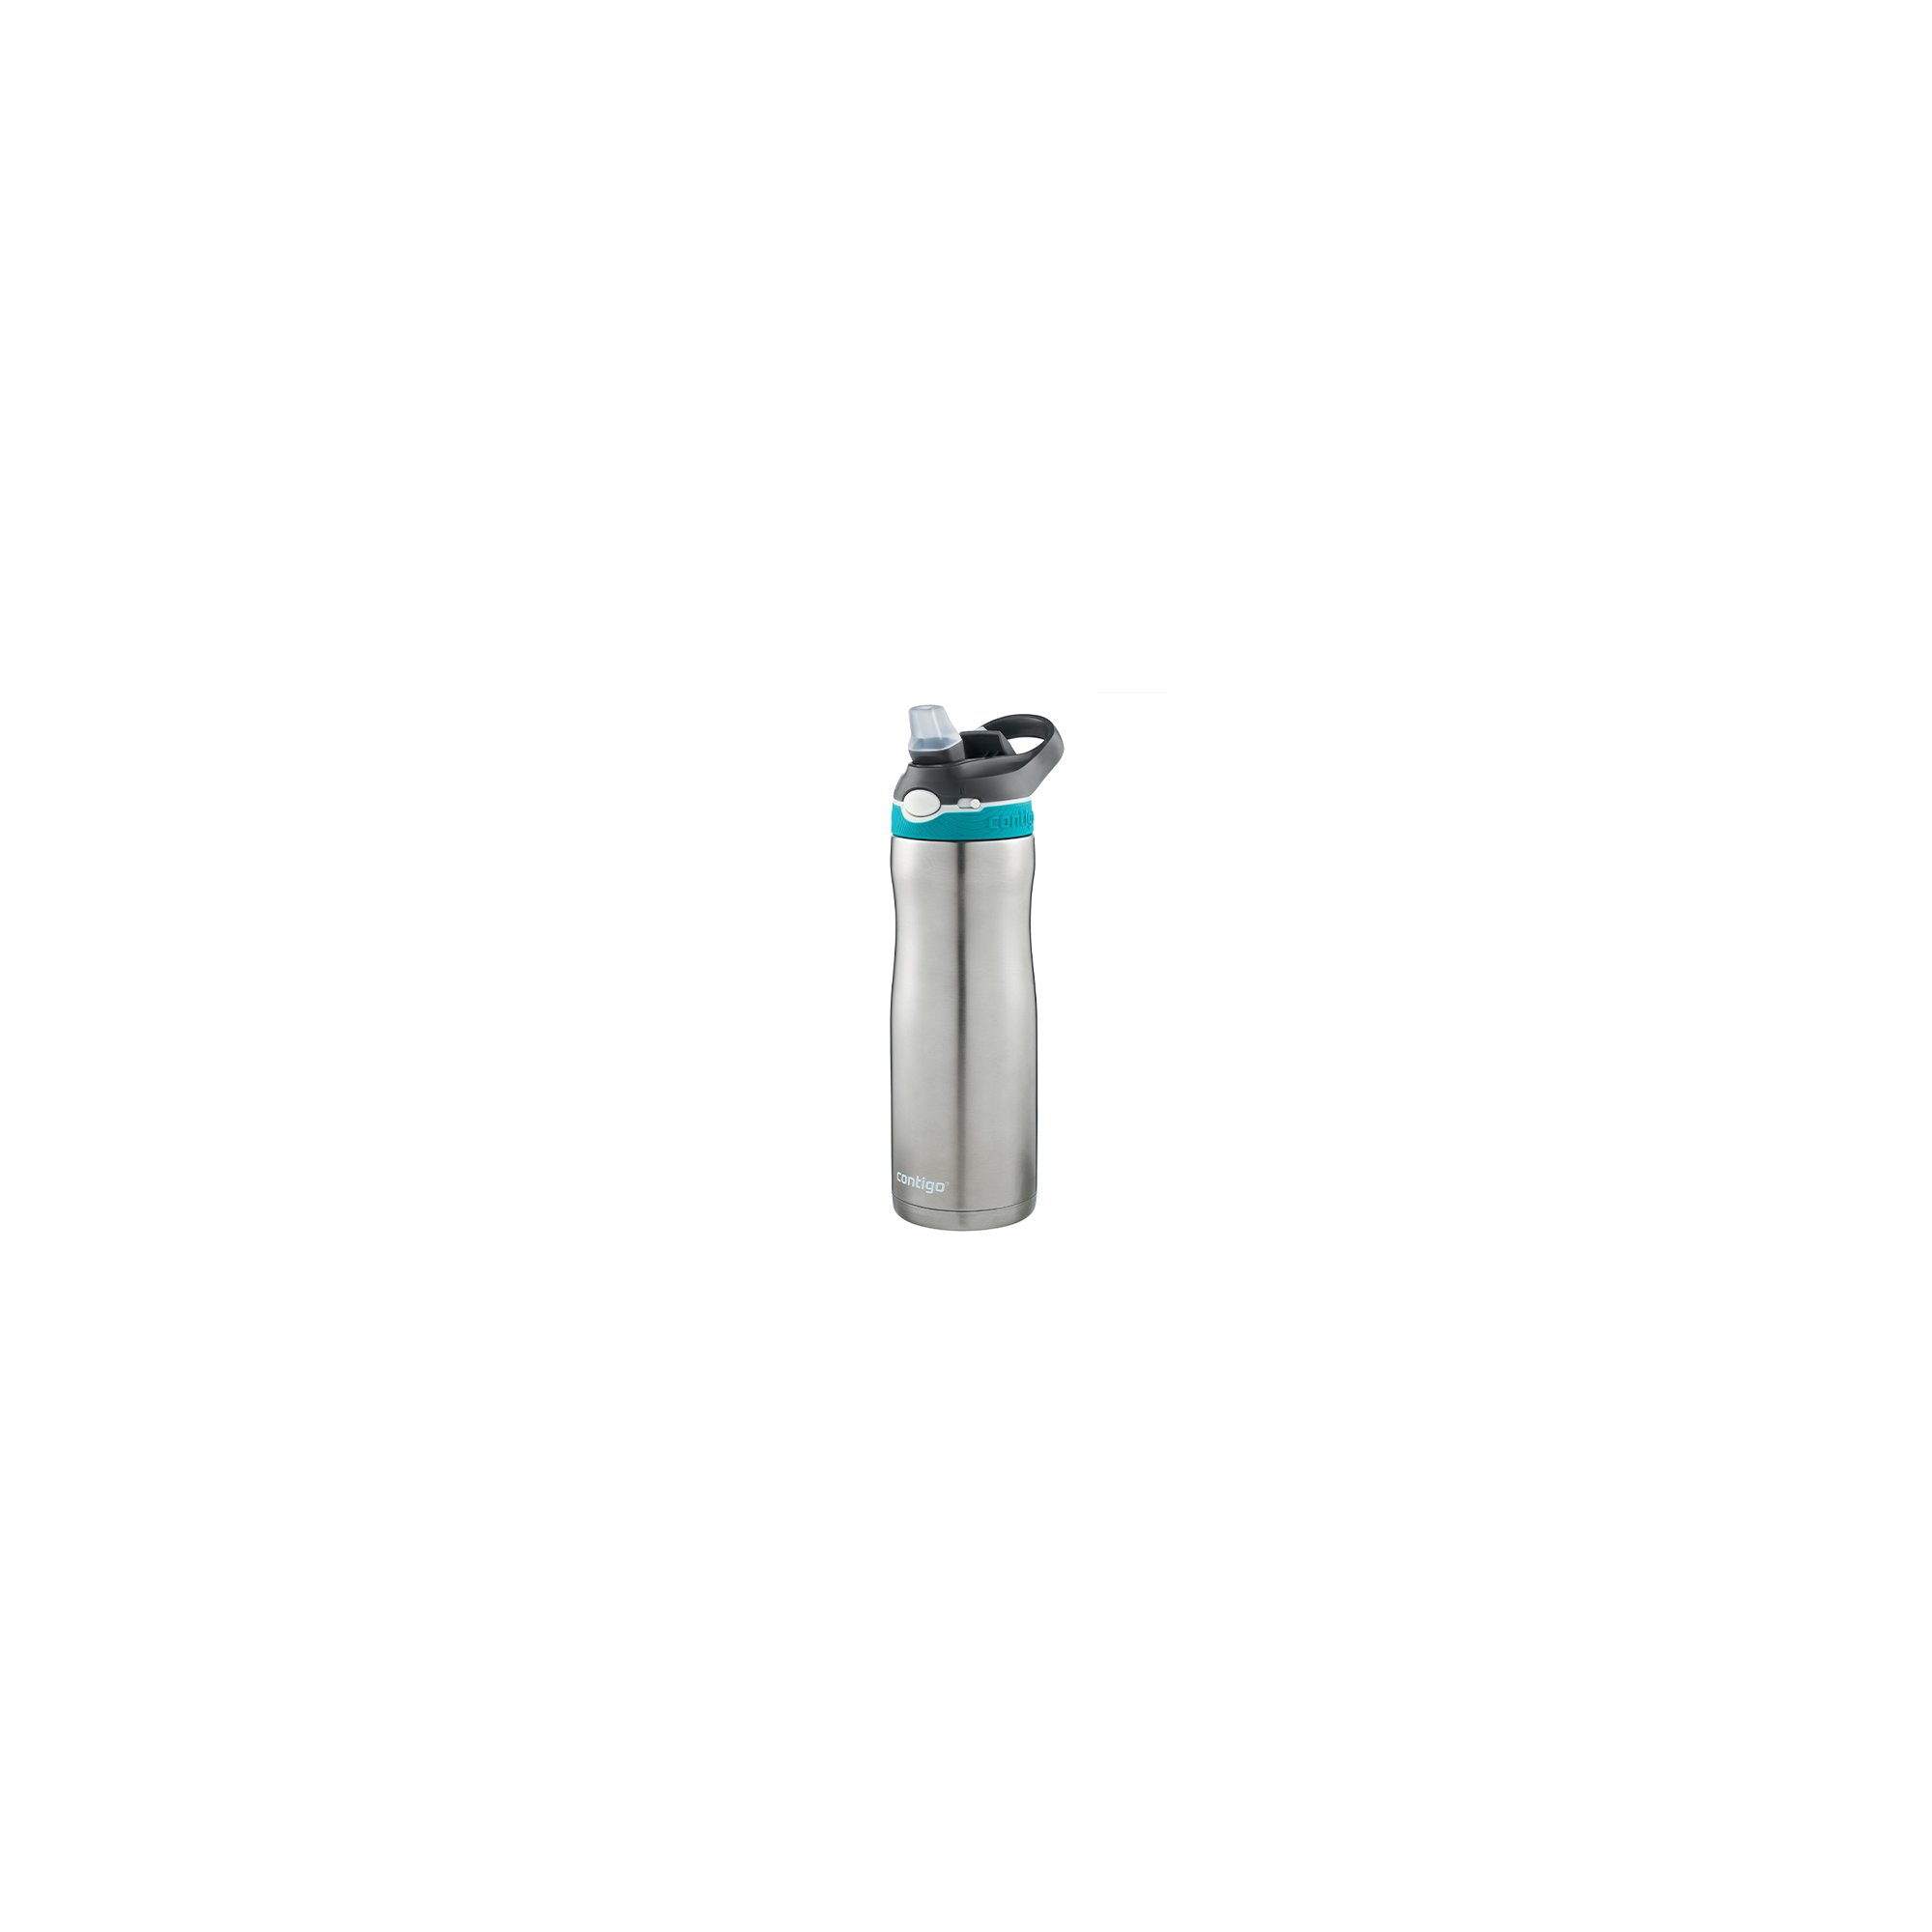 AUTOSPOUT® Ashland Chill, 20oz, Scuba Stainless Steel Water Bottle